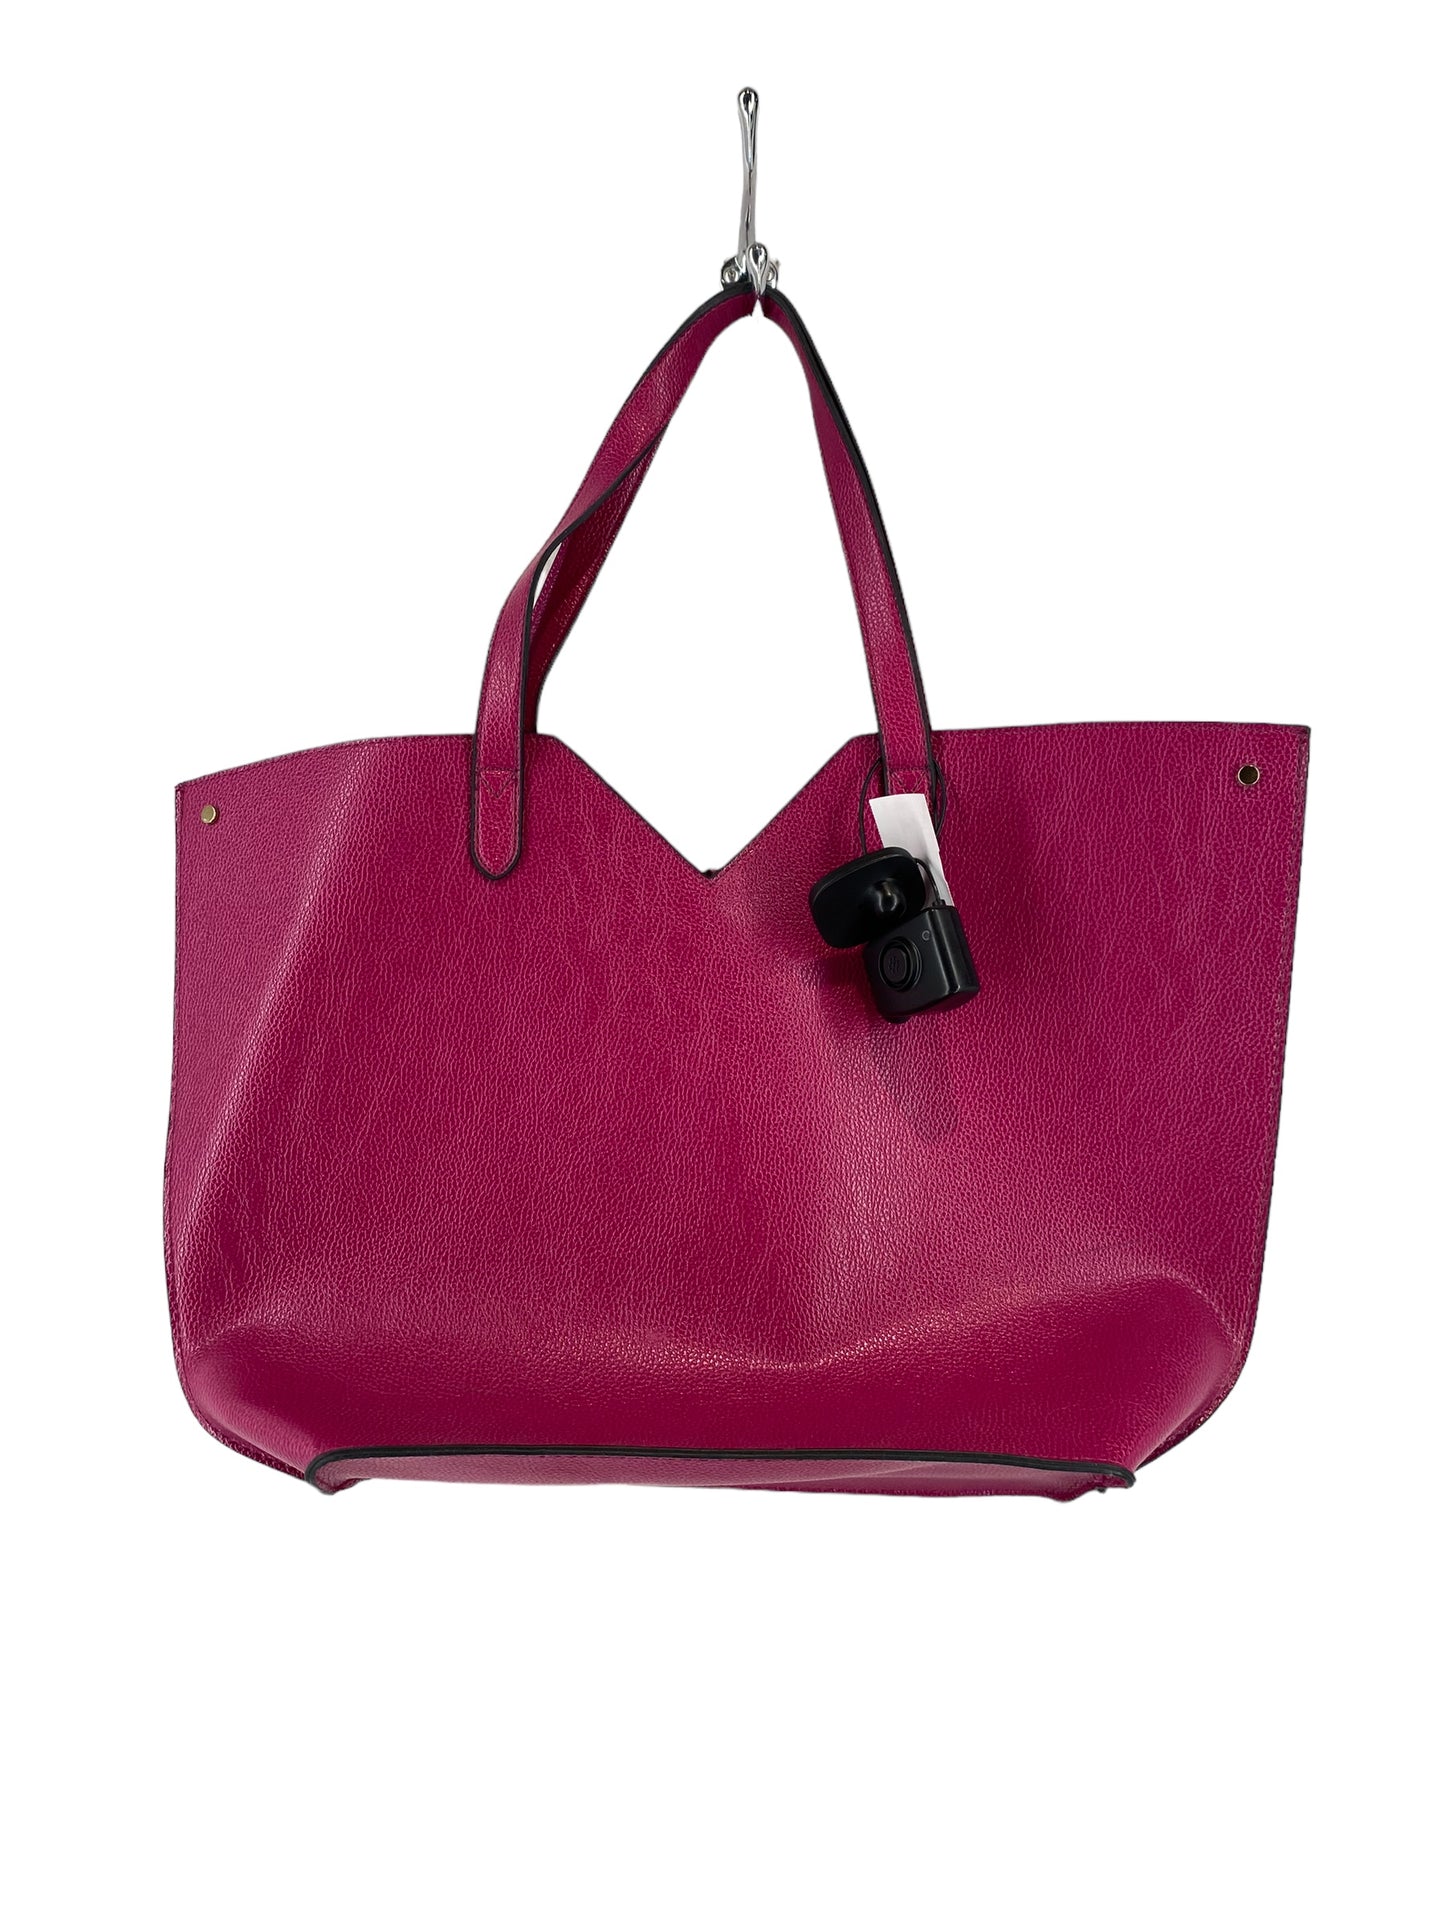 Handbag By Neiman Marcus  Size: Large